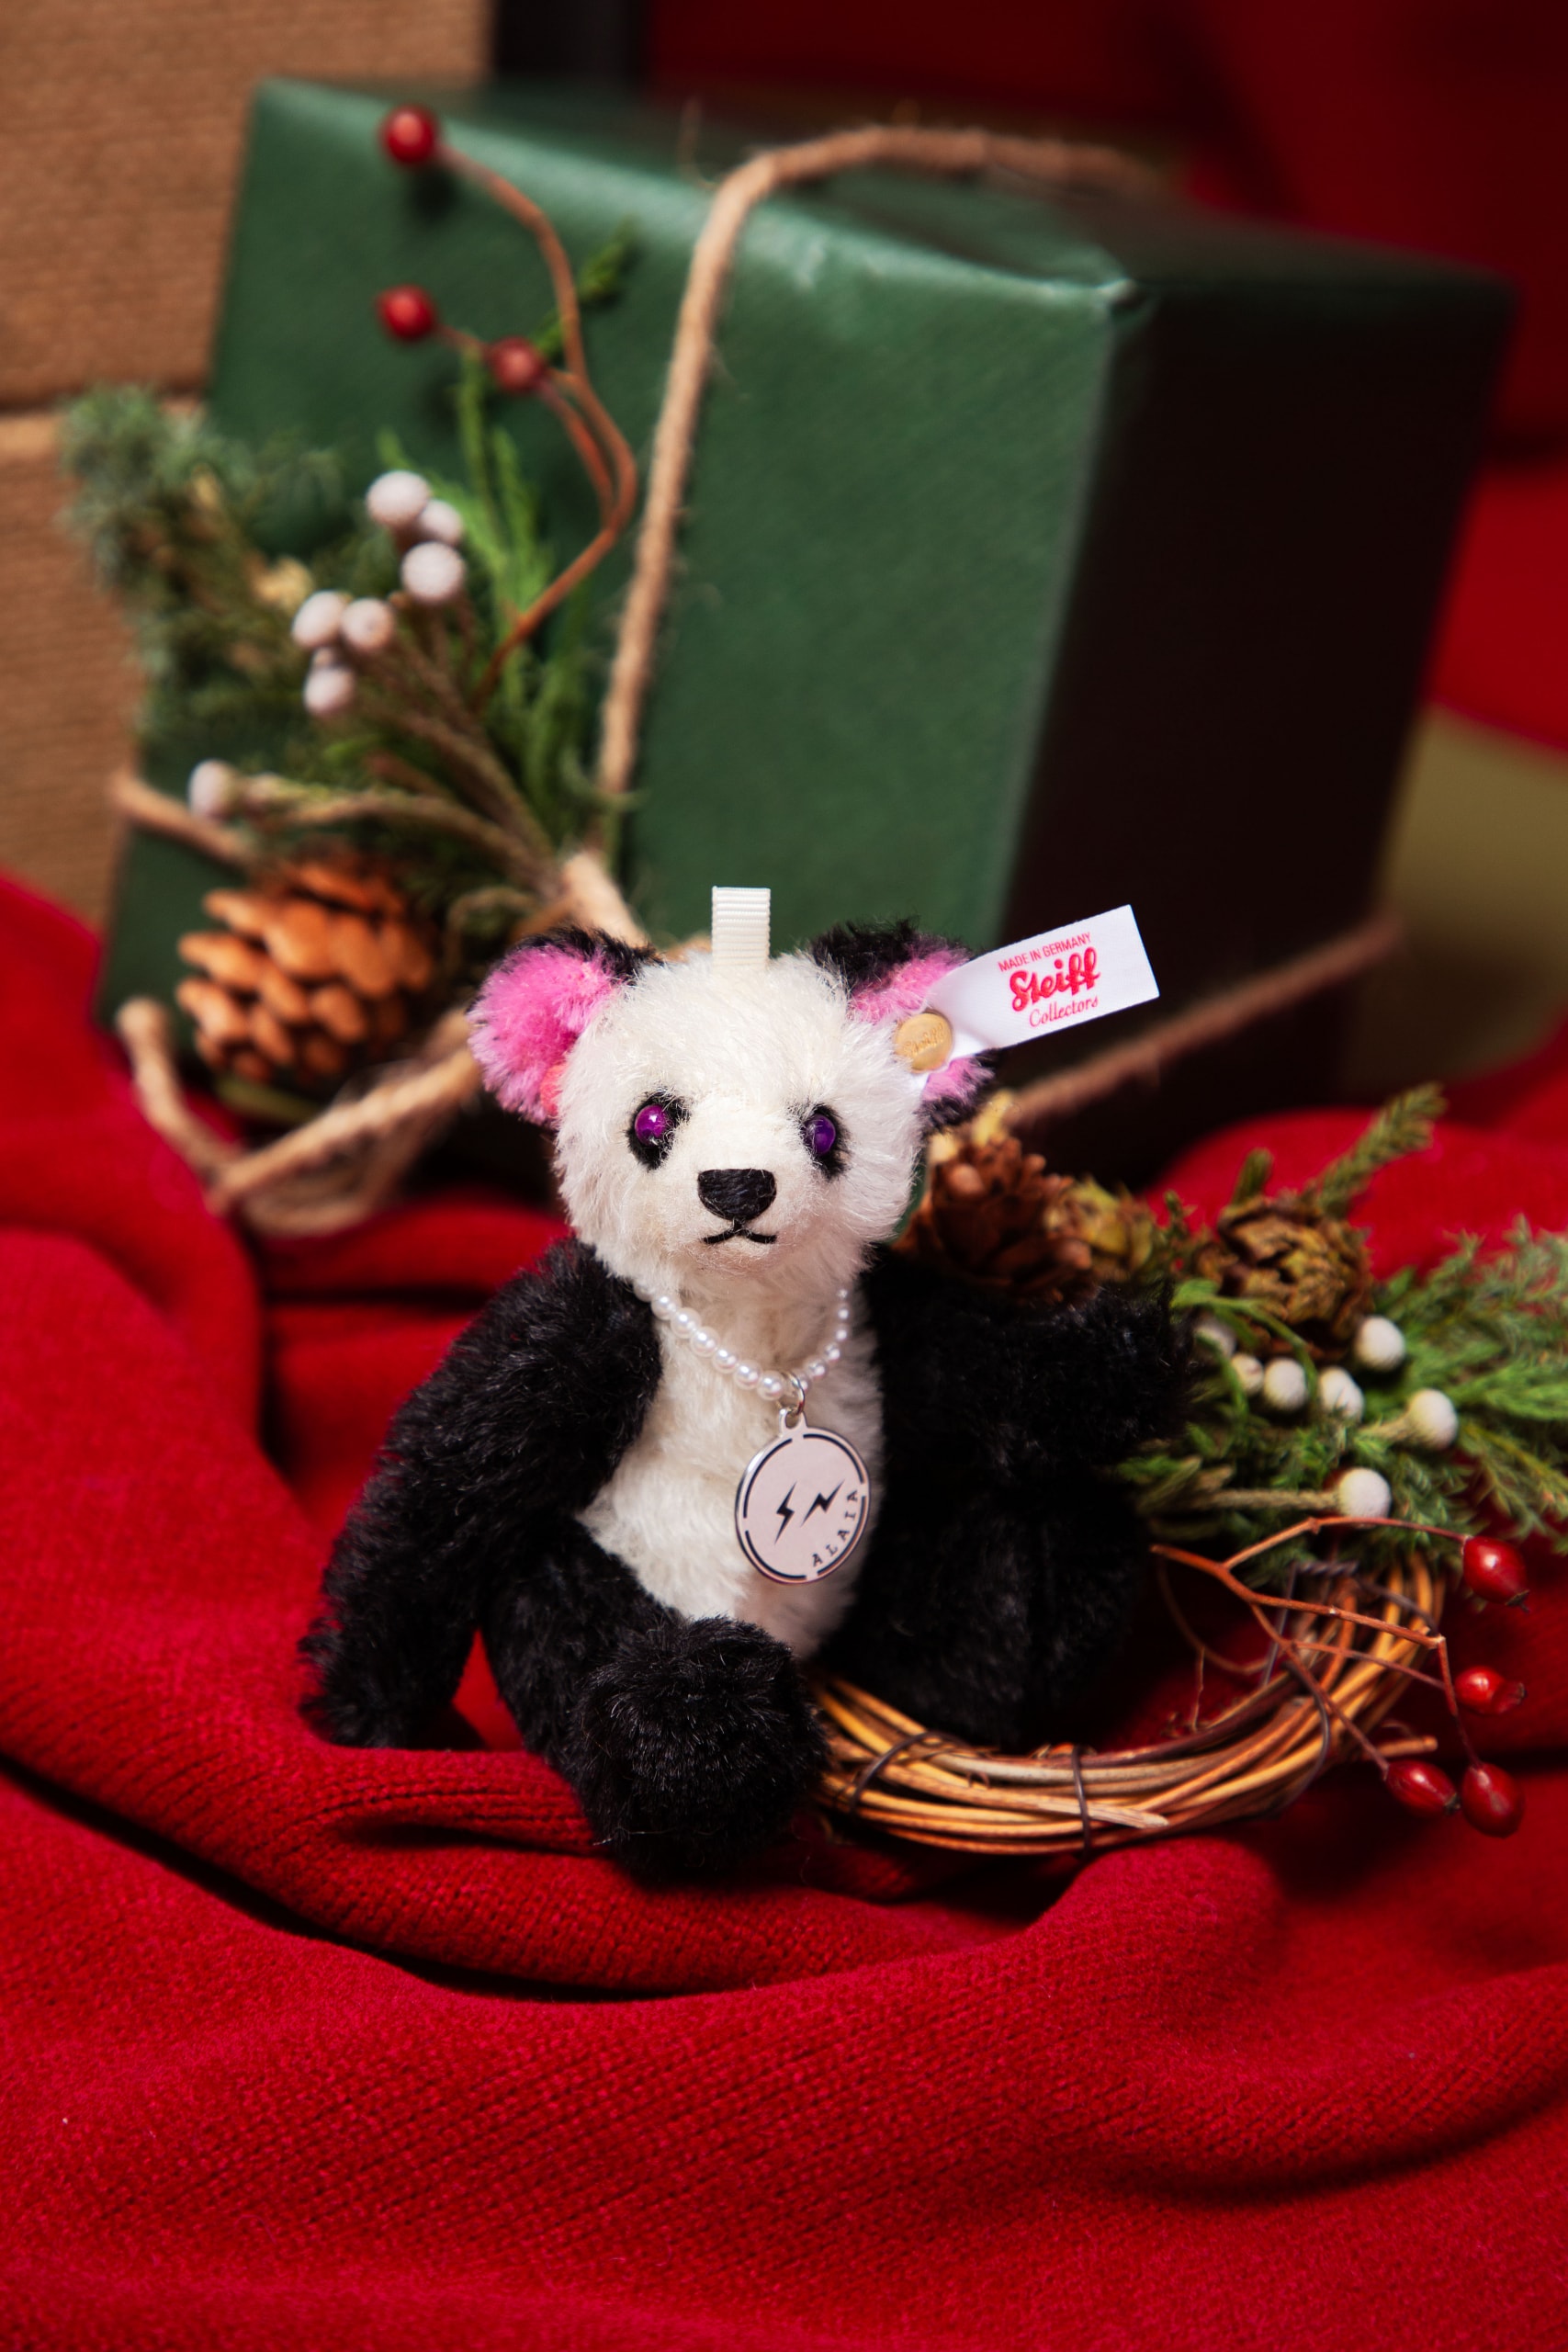 fragment design x Alaia x Steiff 三方聯名全新掛飾「Mini Panda Bearry Cute」正式登場